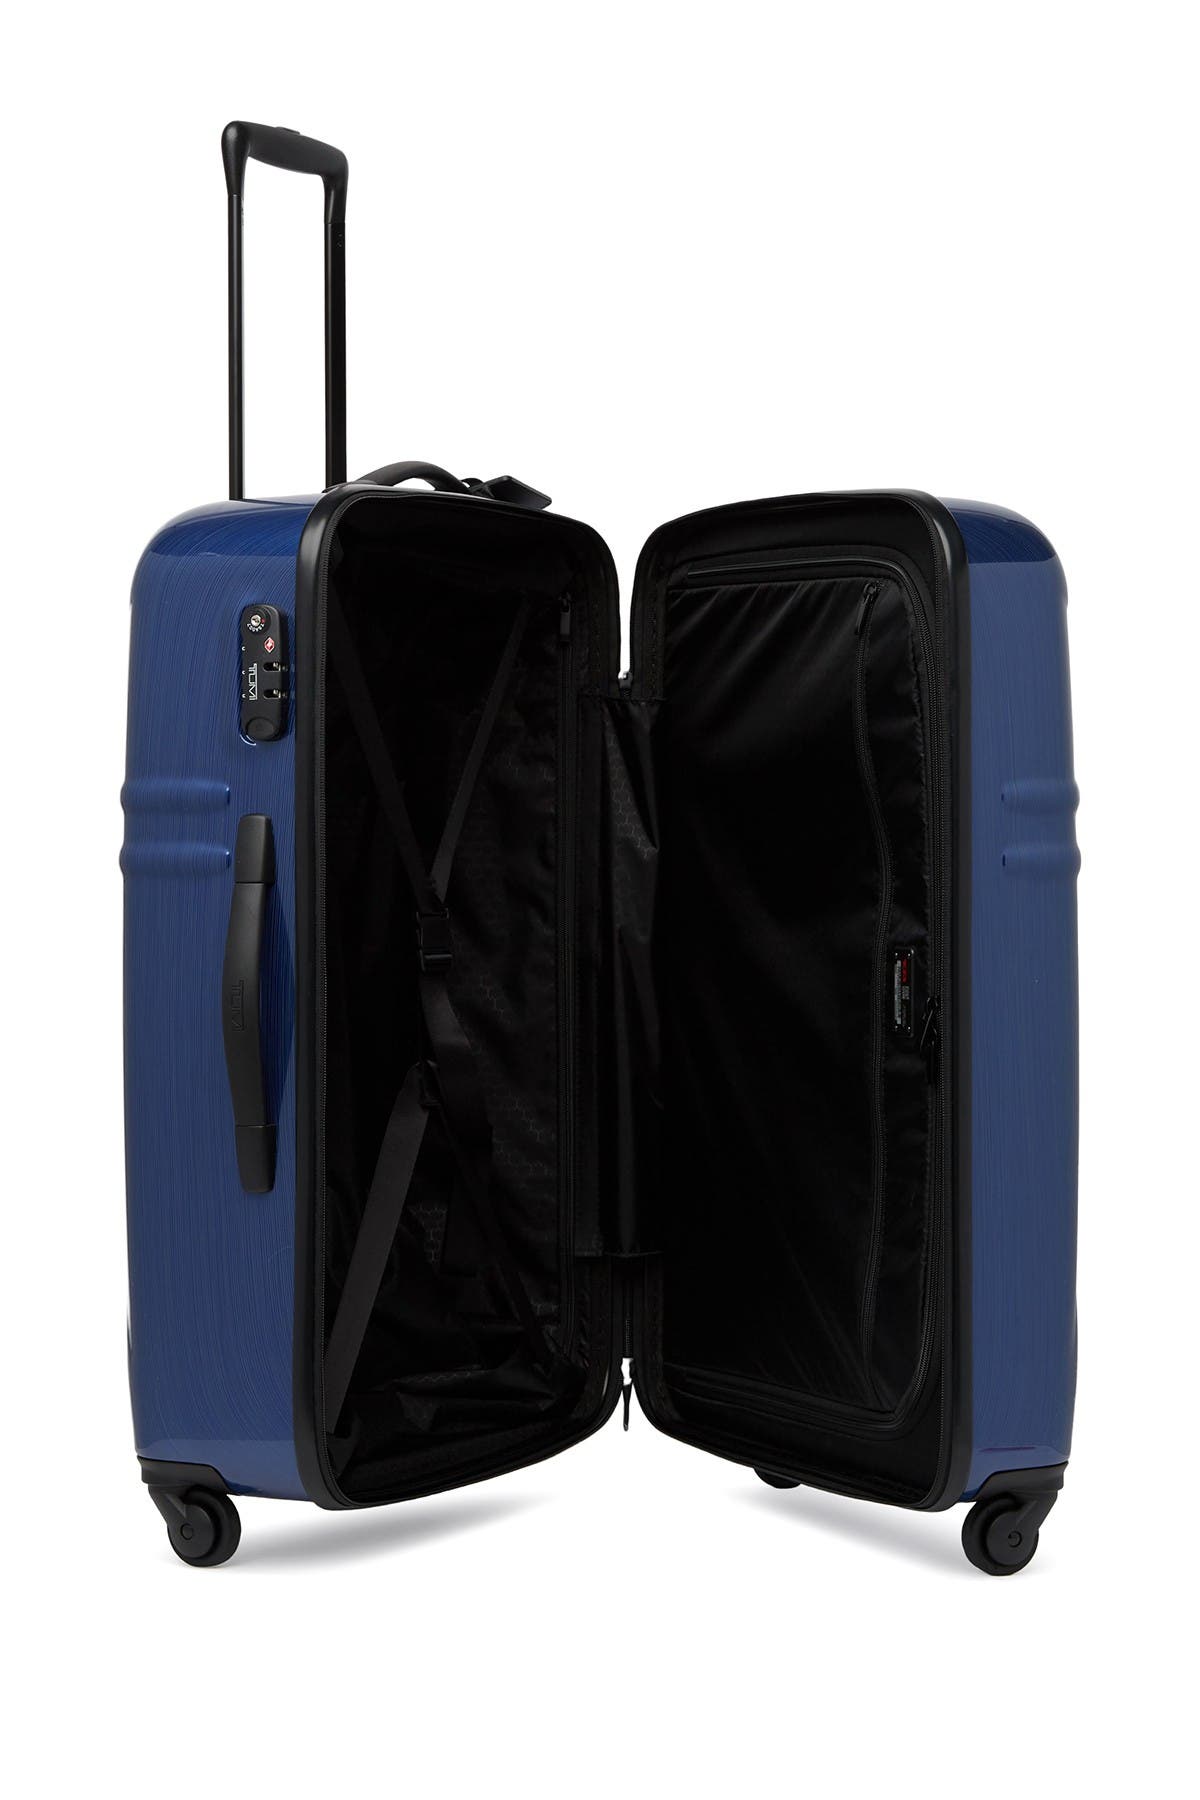 Tumi International 28" Hardside Spinner Suitcase In Bright Blue1